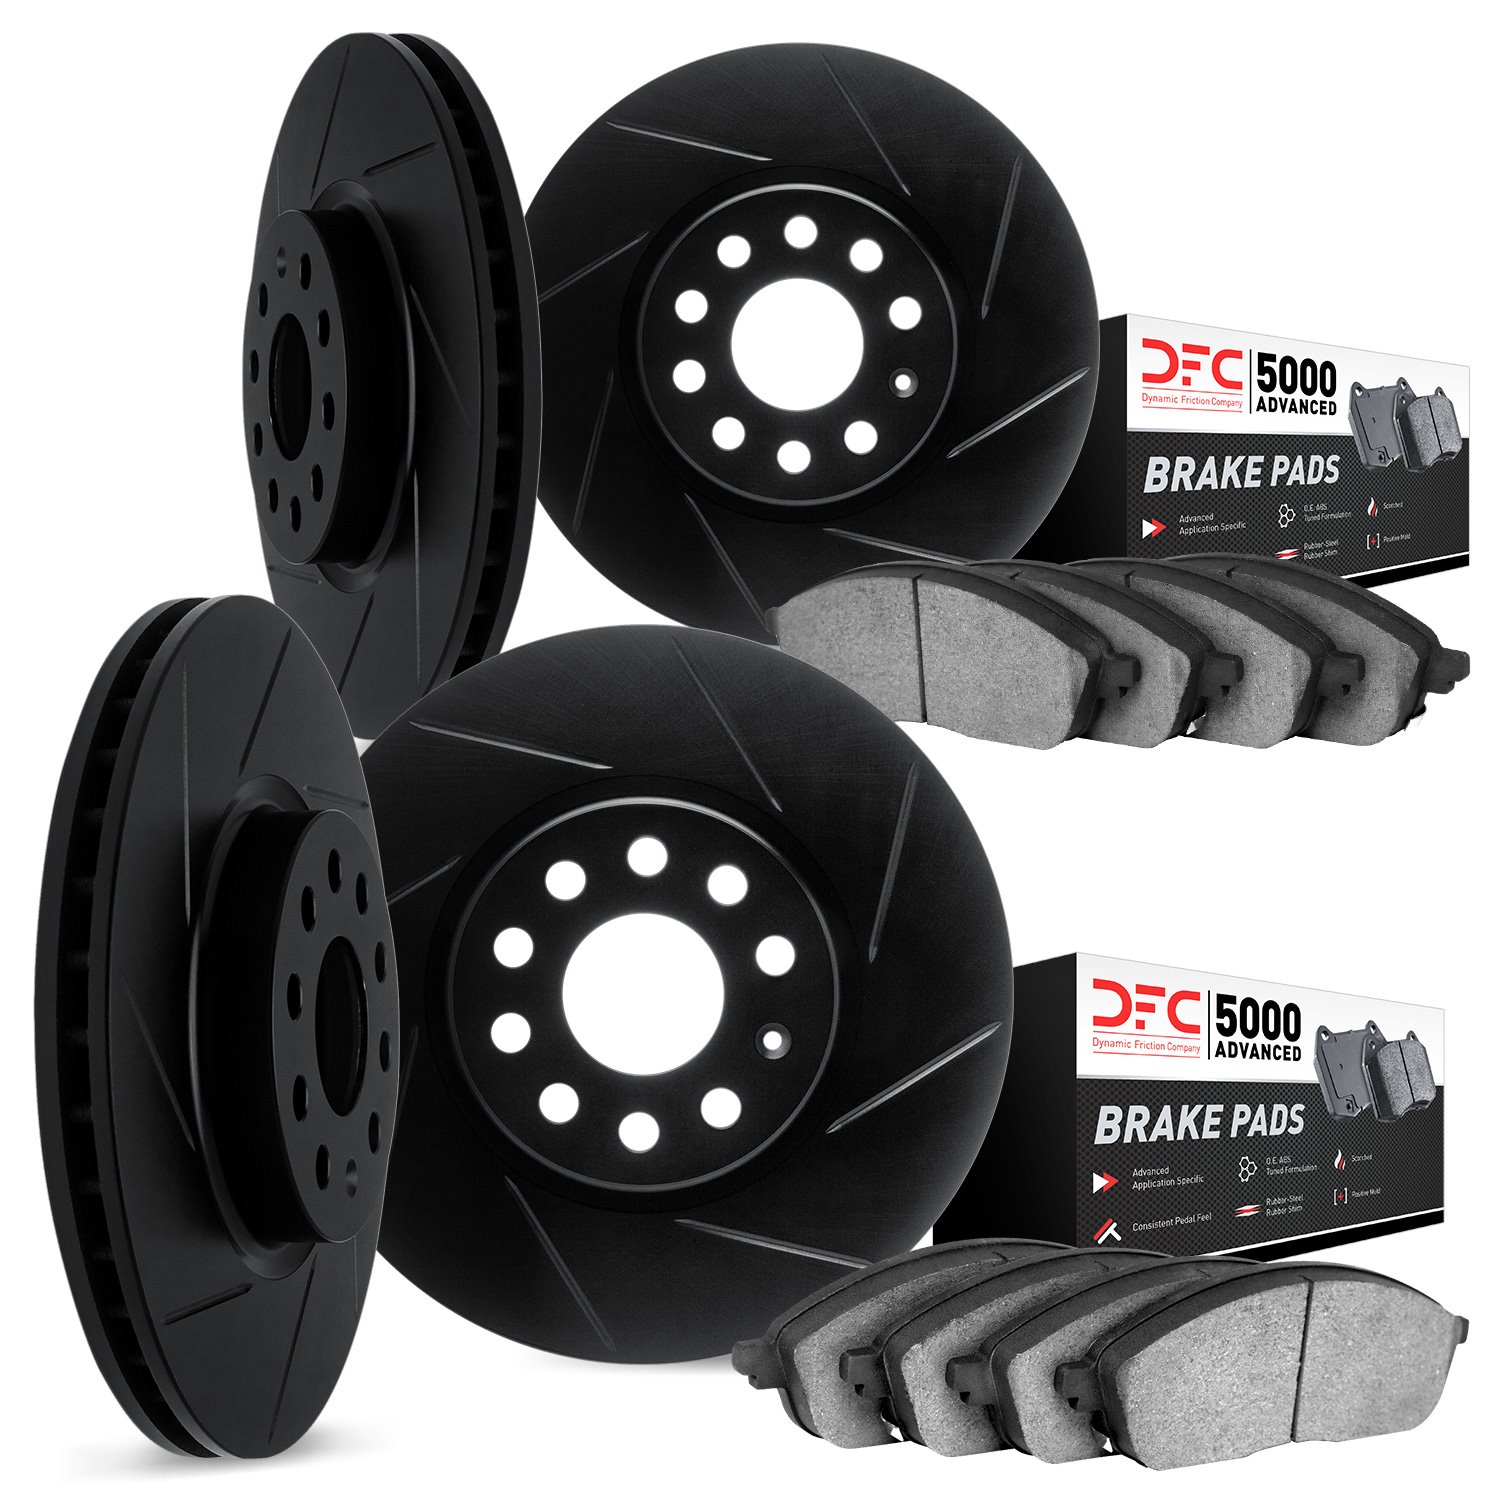 3514-68010 Slotted Brake Rotors w/5000 Advanced Brake Pads Kit & Hardware [Black], Fits Select Infiniti/Nissan, Position: Front